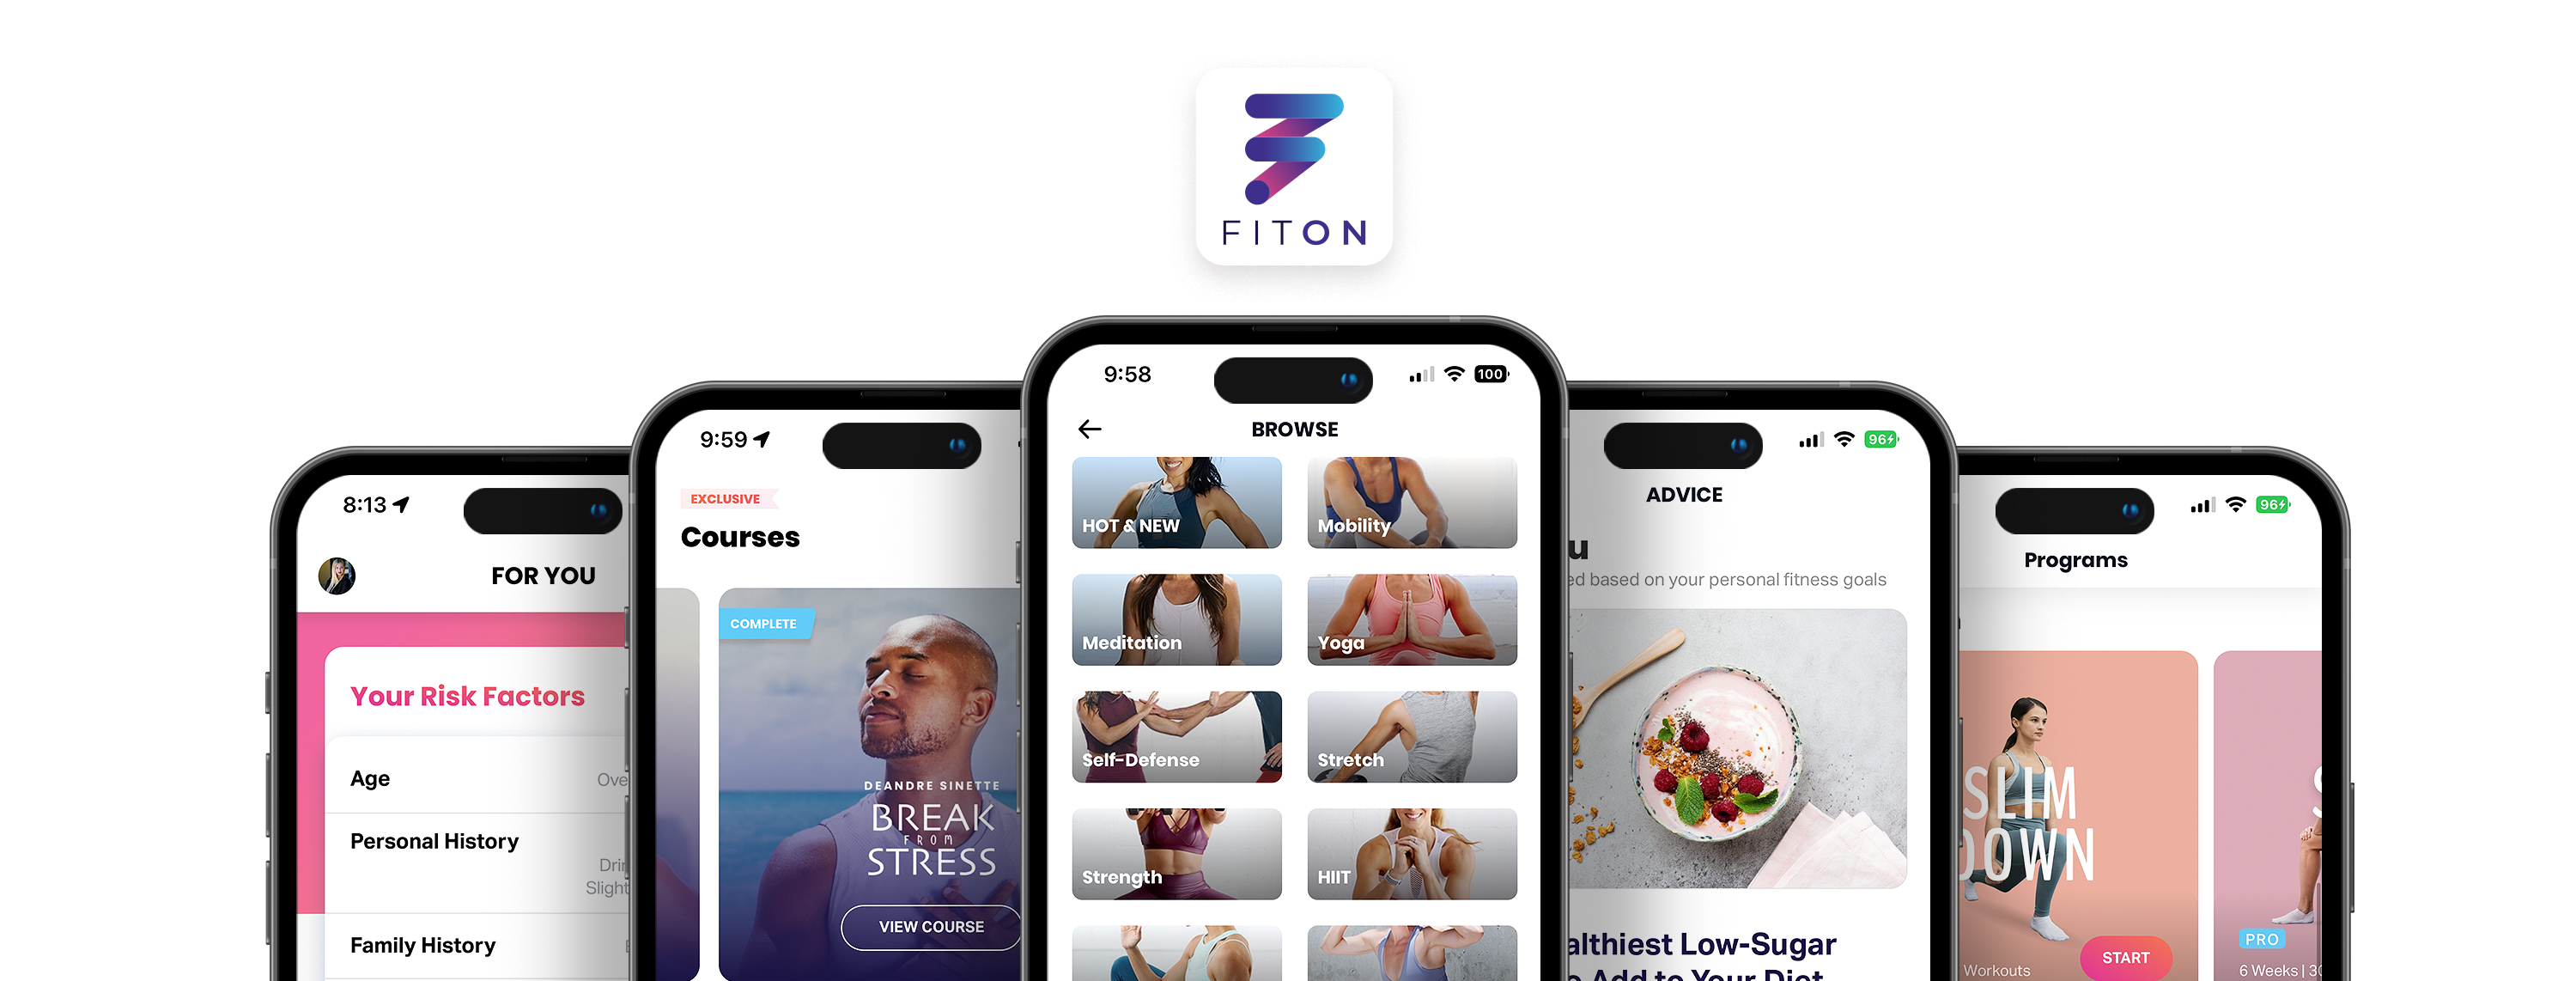 FitOn Health mobile app